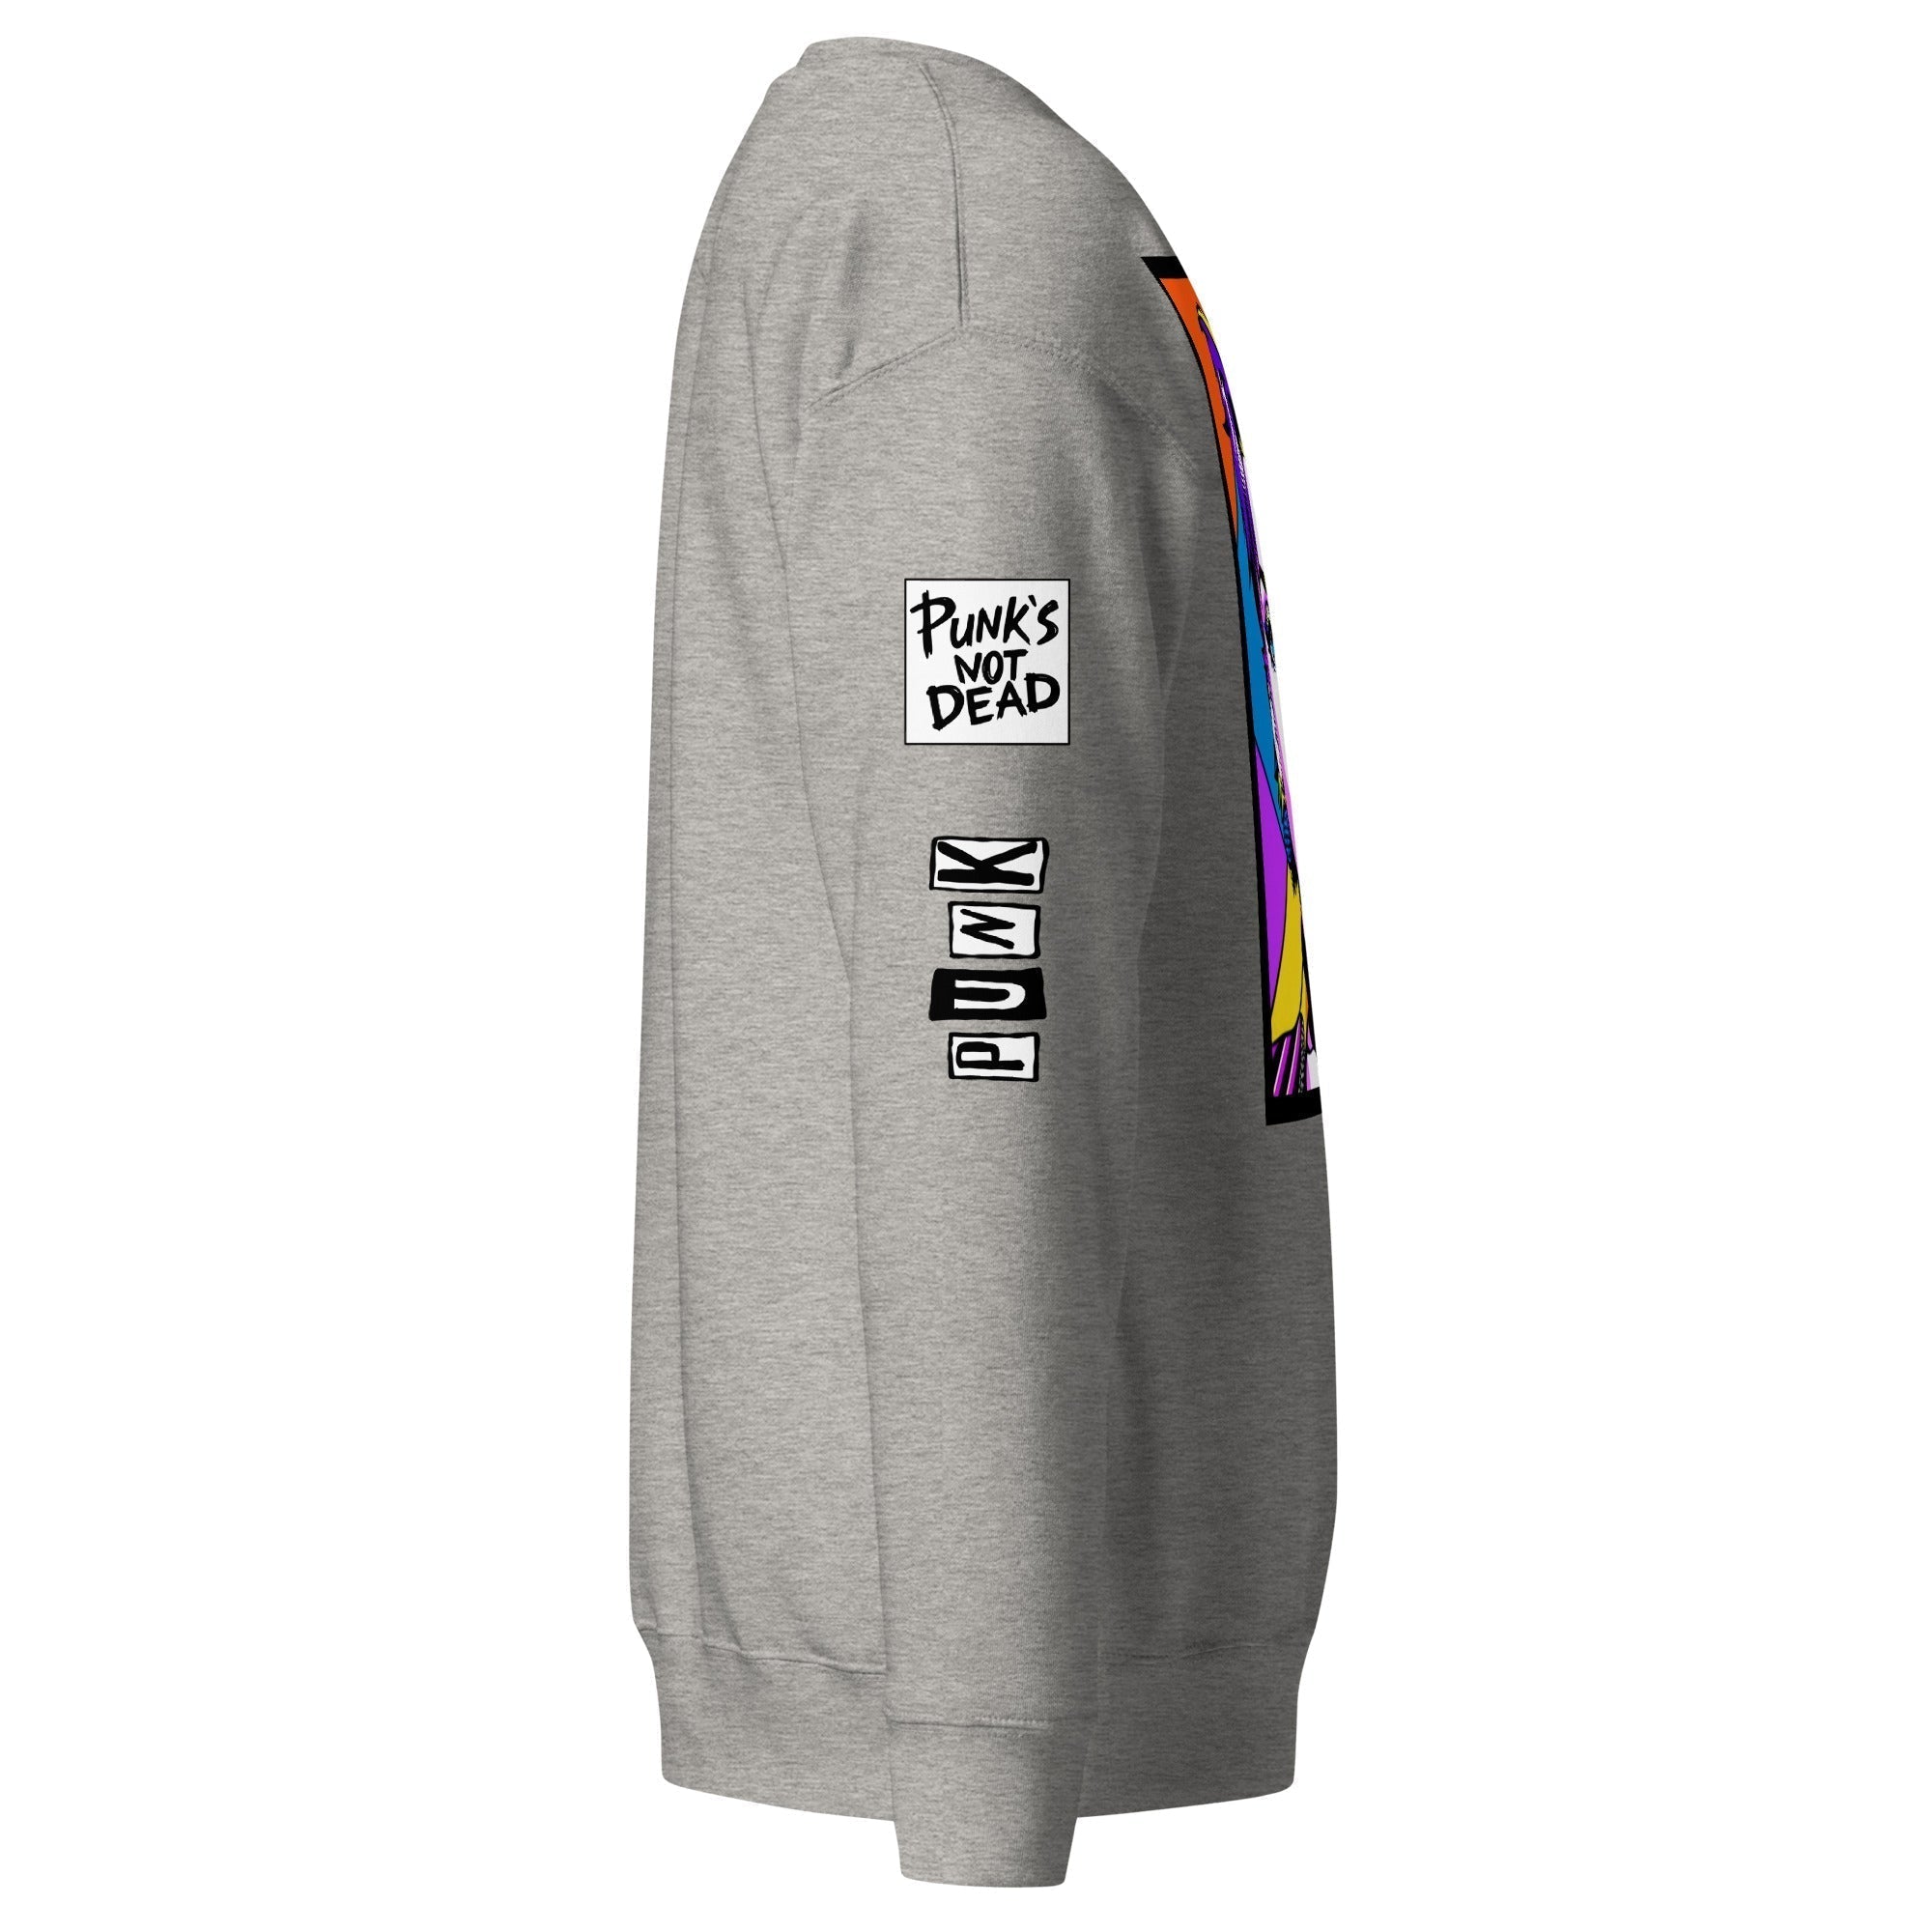 Unisex Premium Sweatshirt - Punk Pop Art Scene 15 - GRAPHIC T-SHIRTS